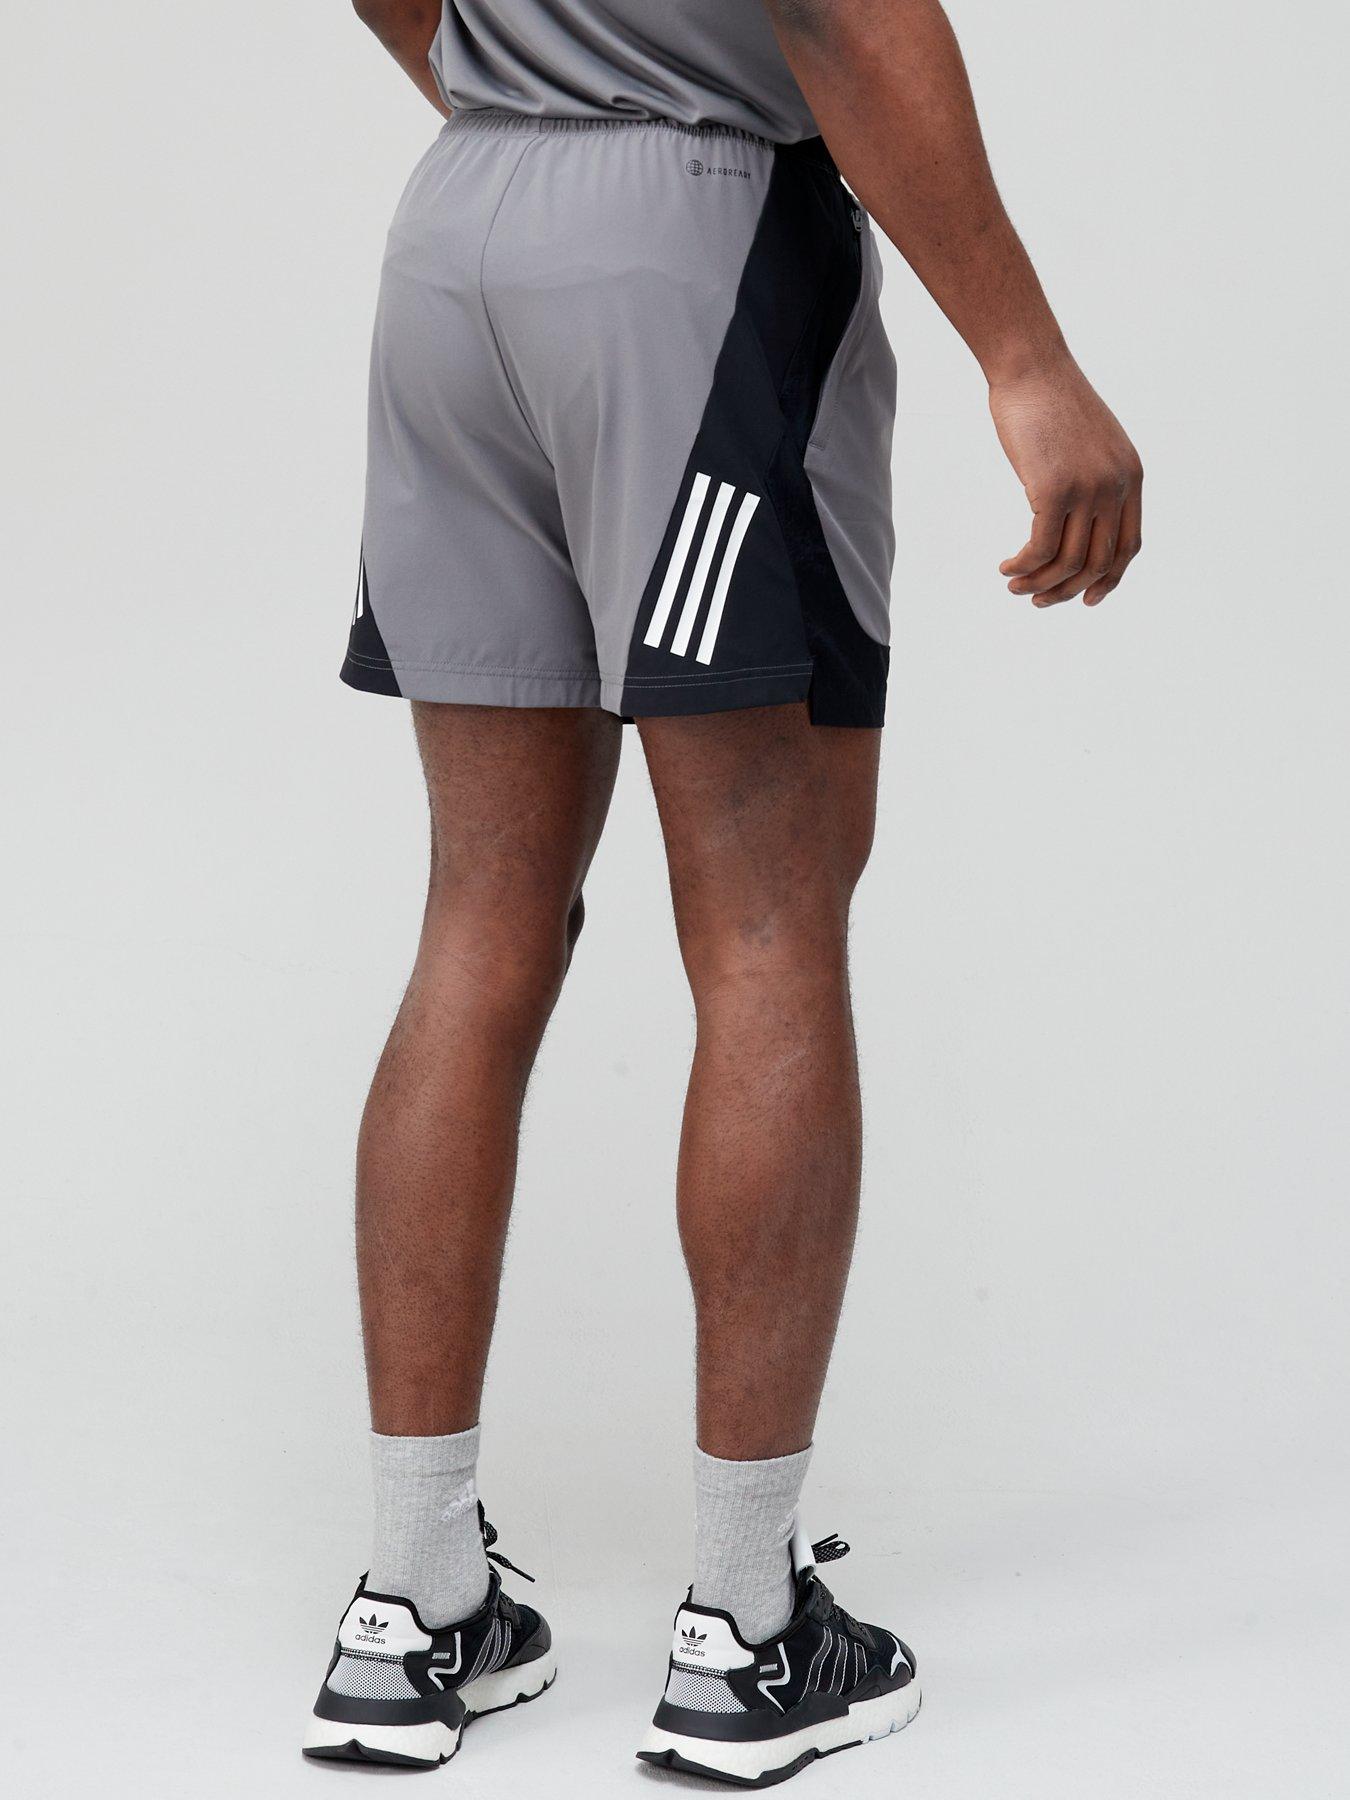  5 Inch Aeroready Training Shorts - Grey/Black